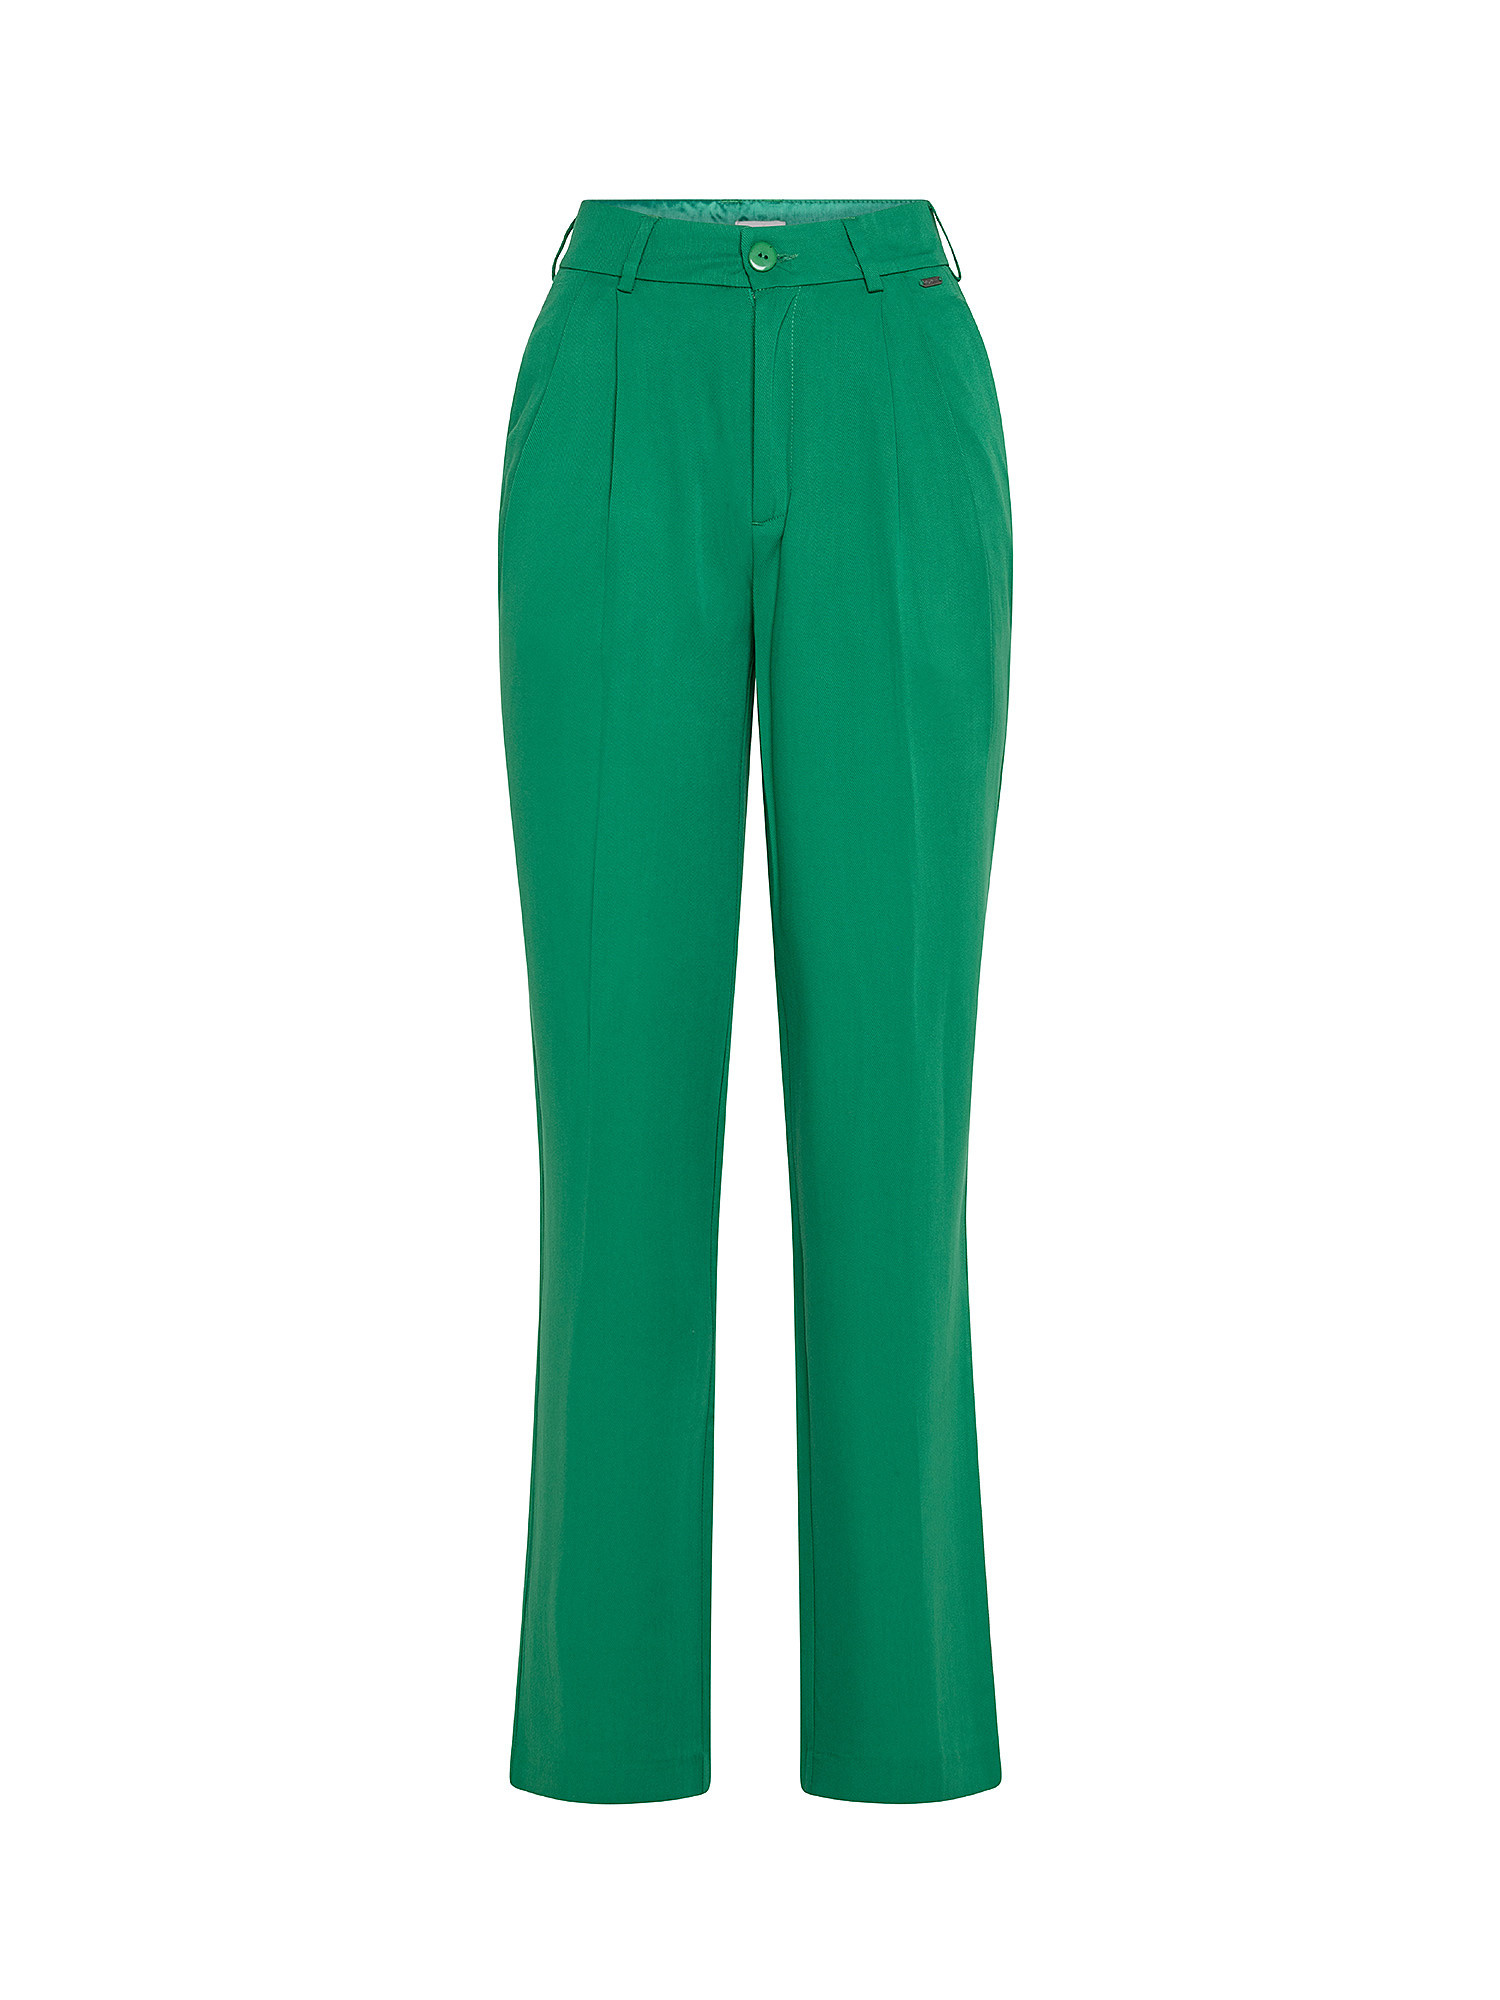 Fatima chino pants, Green, large image number 0